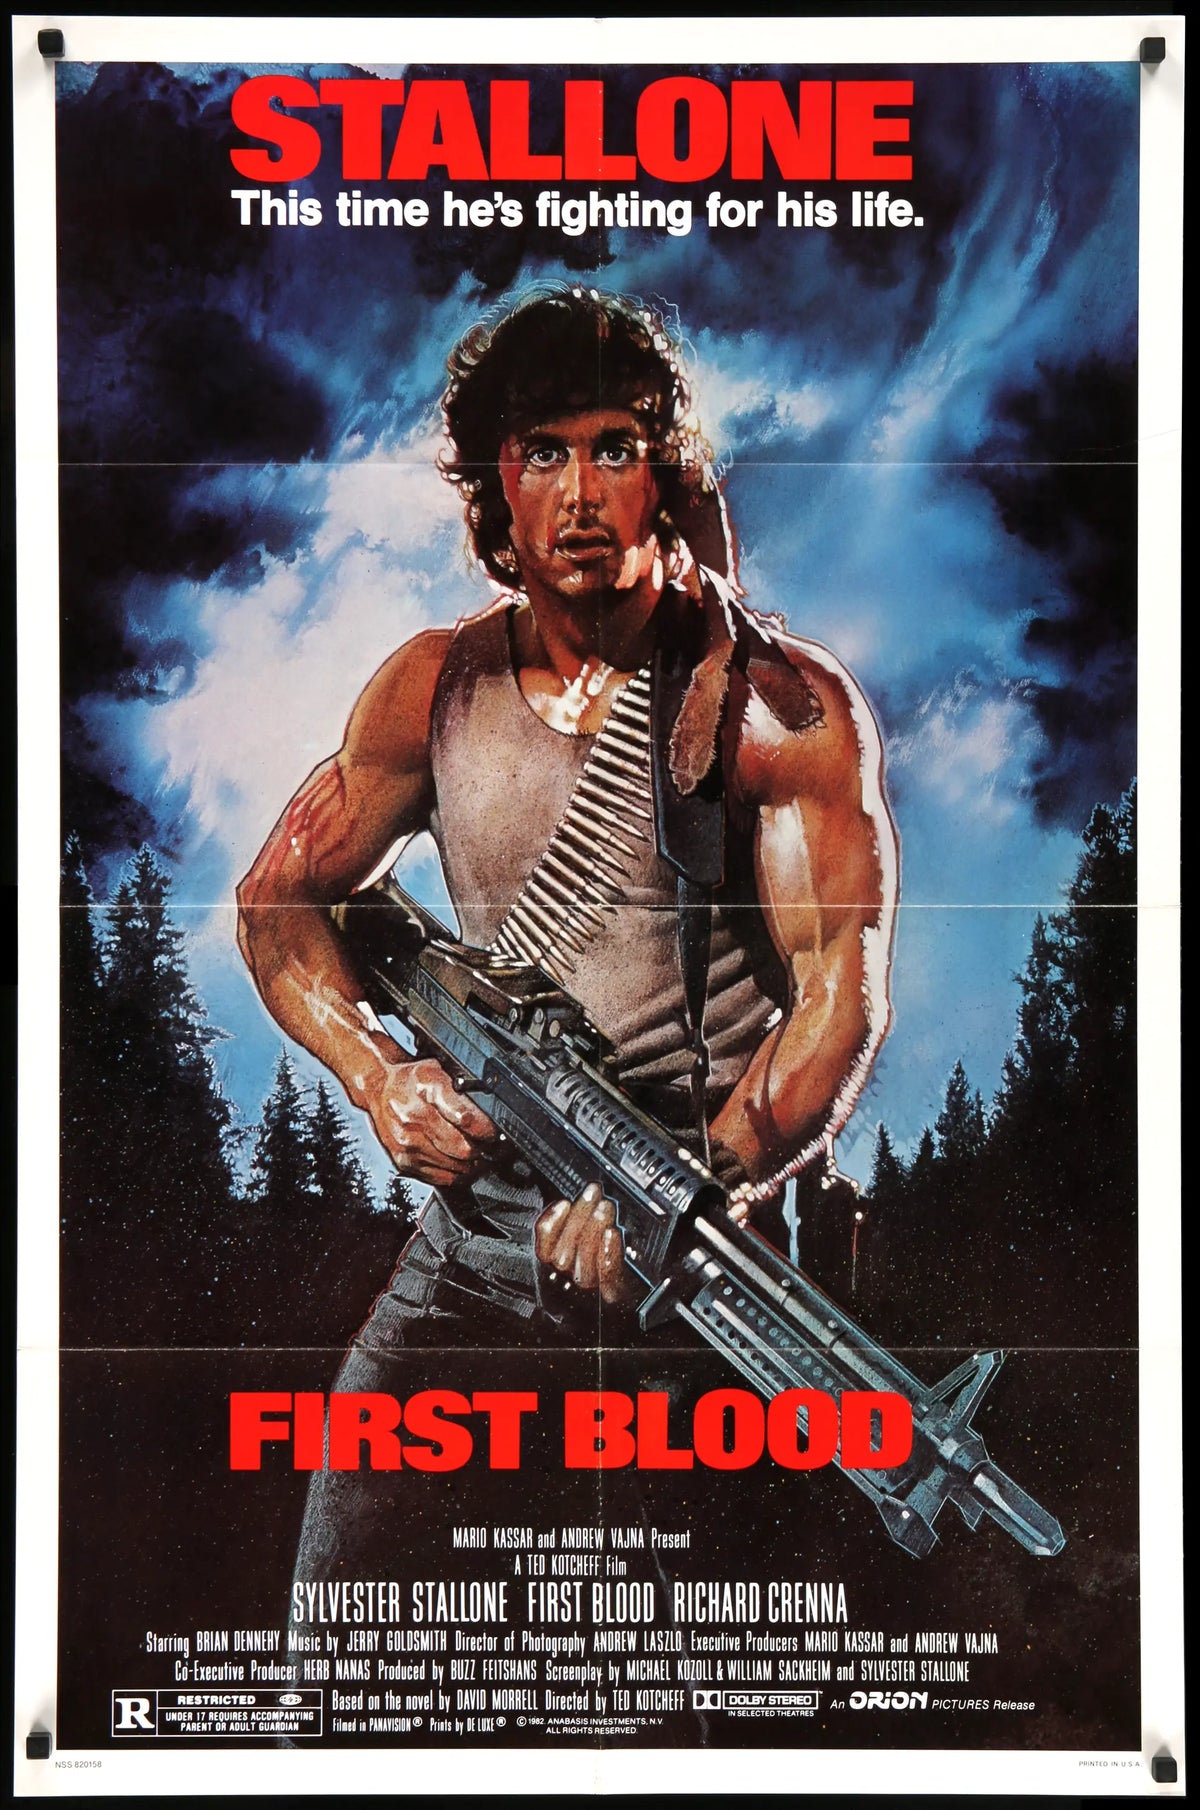 First Blood (1982) original movie poster for sale at Original Film Art